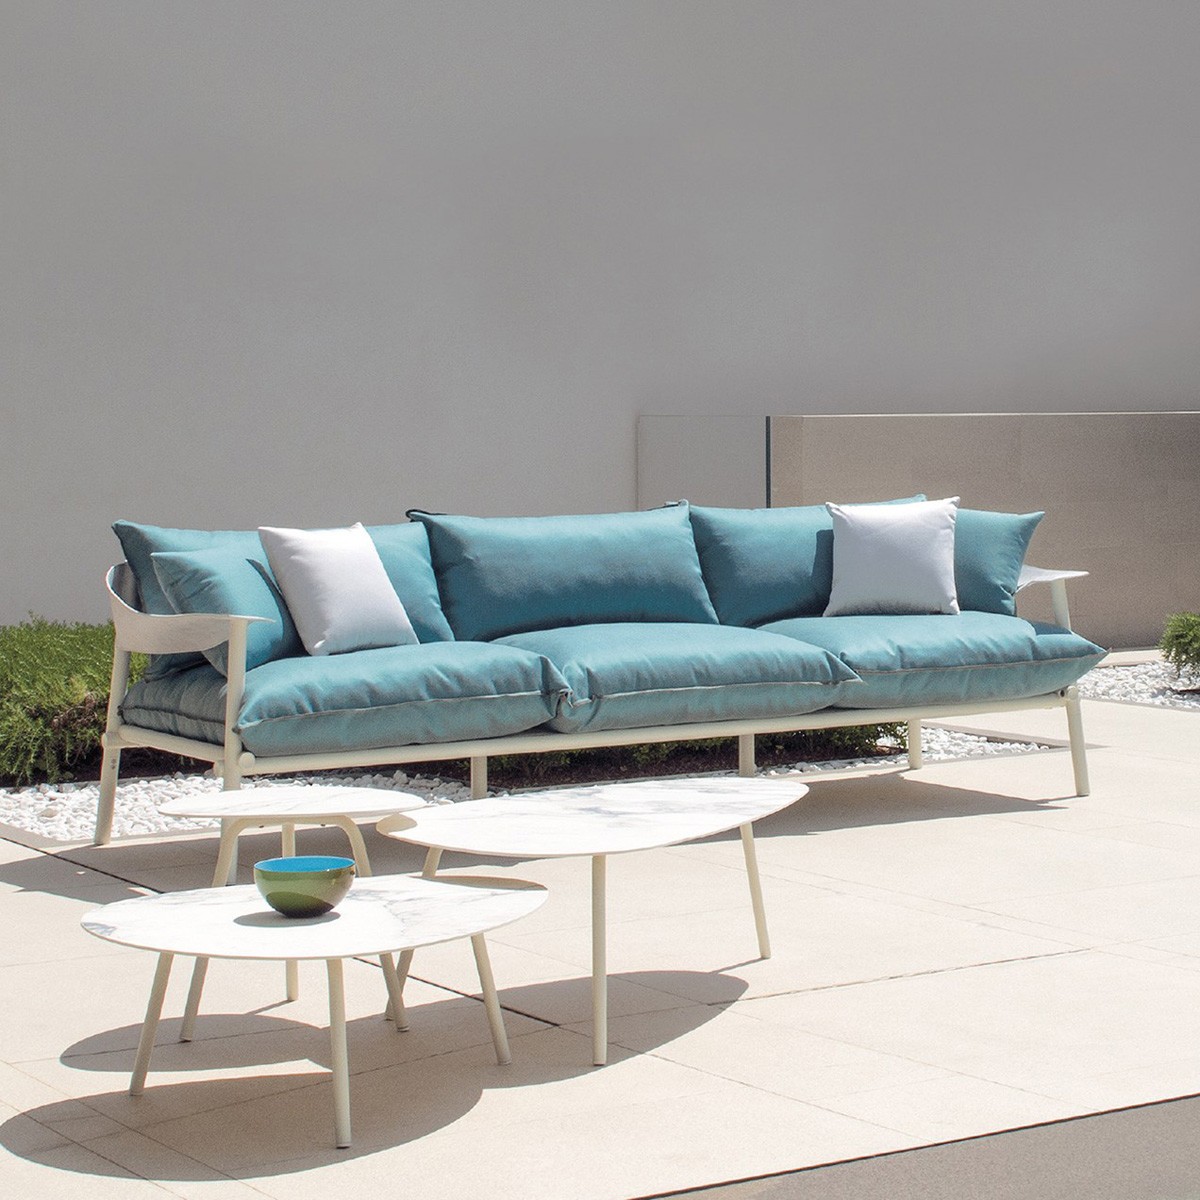 Terramare Sofa from Emu, designed by Chiaramonte and Marin